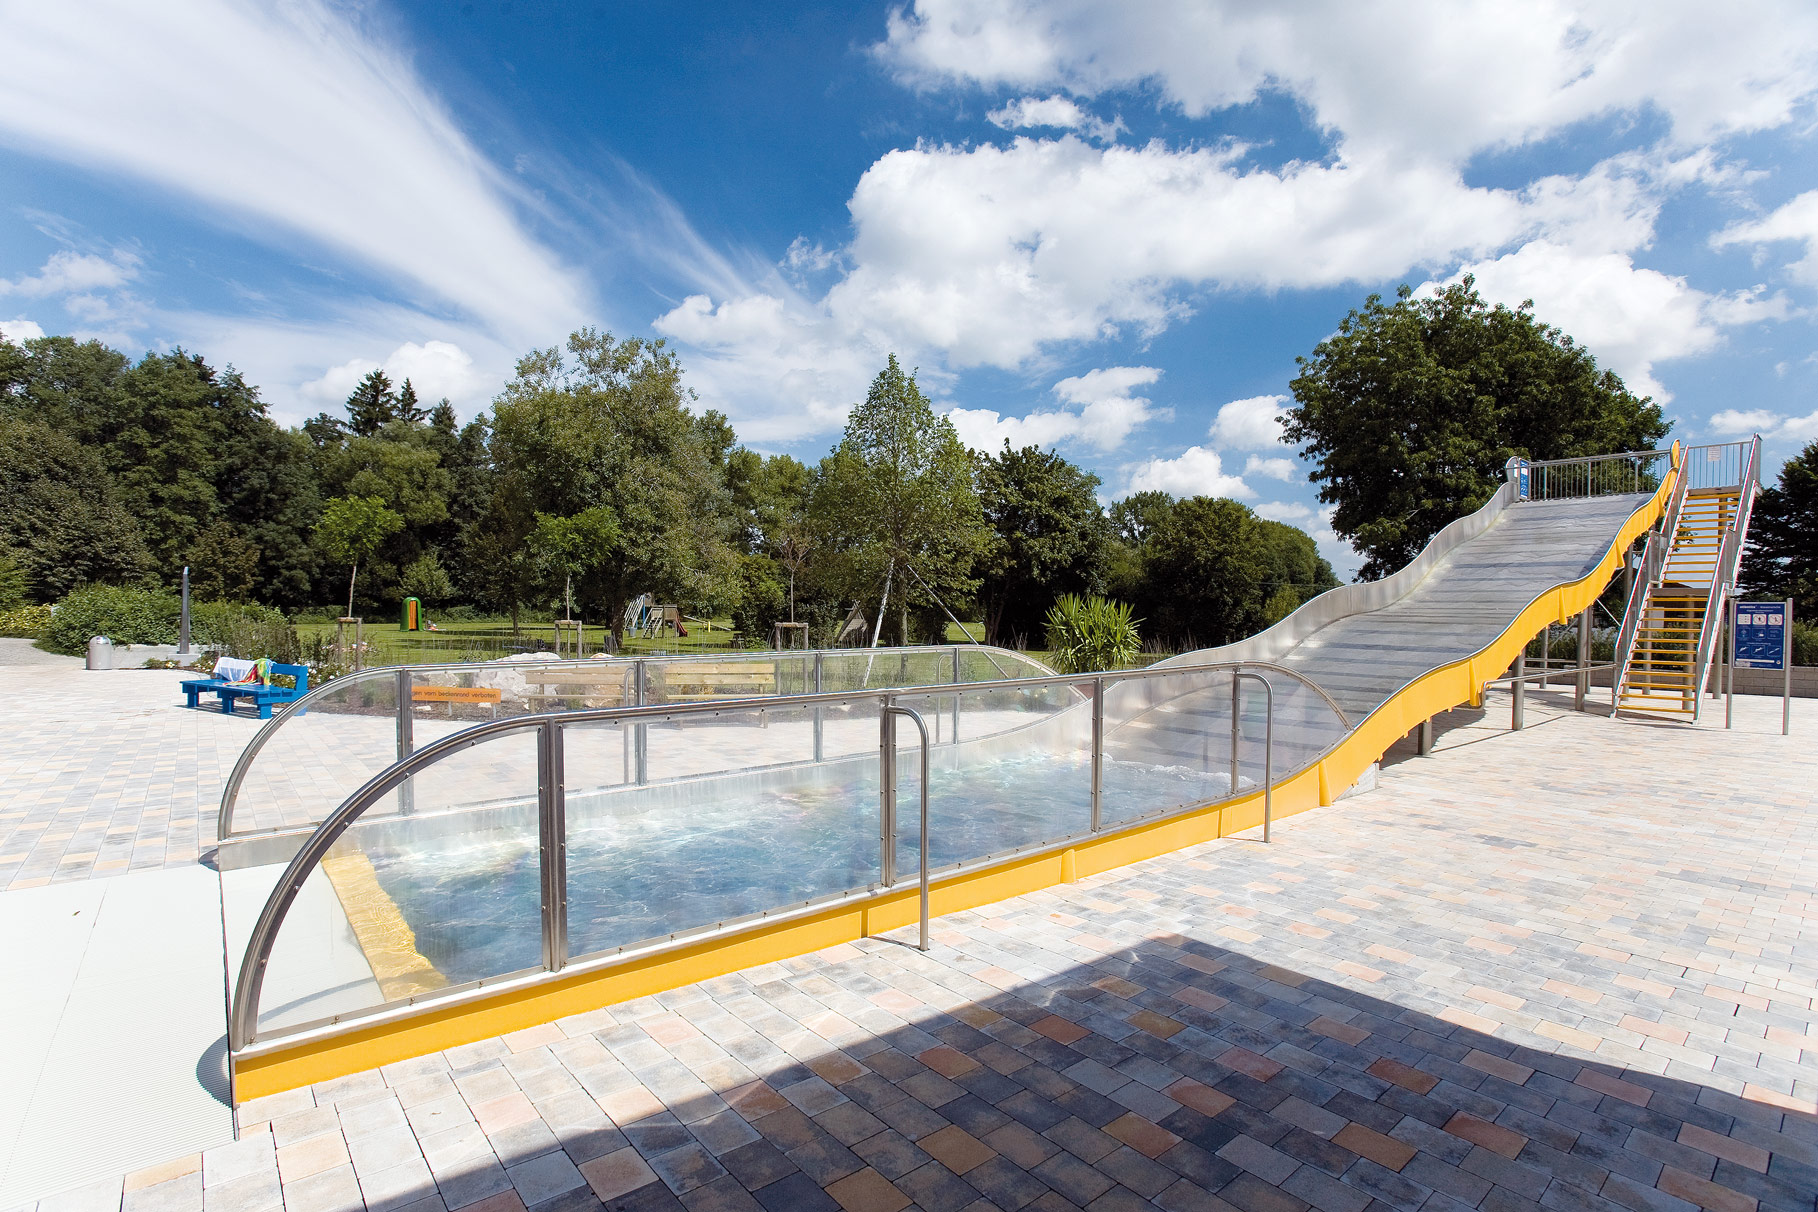 atlantics stainless steel slides open air swimming pool oaknvillage bayern wide water wide waves 076468 Eichenvillage